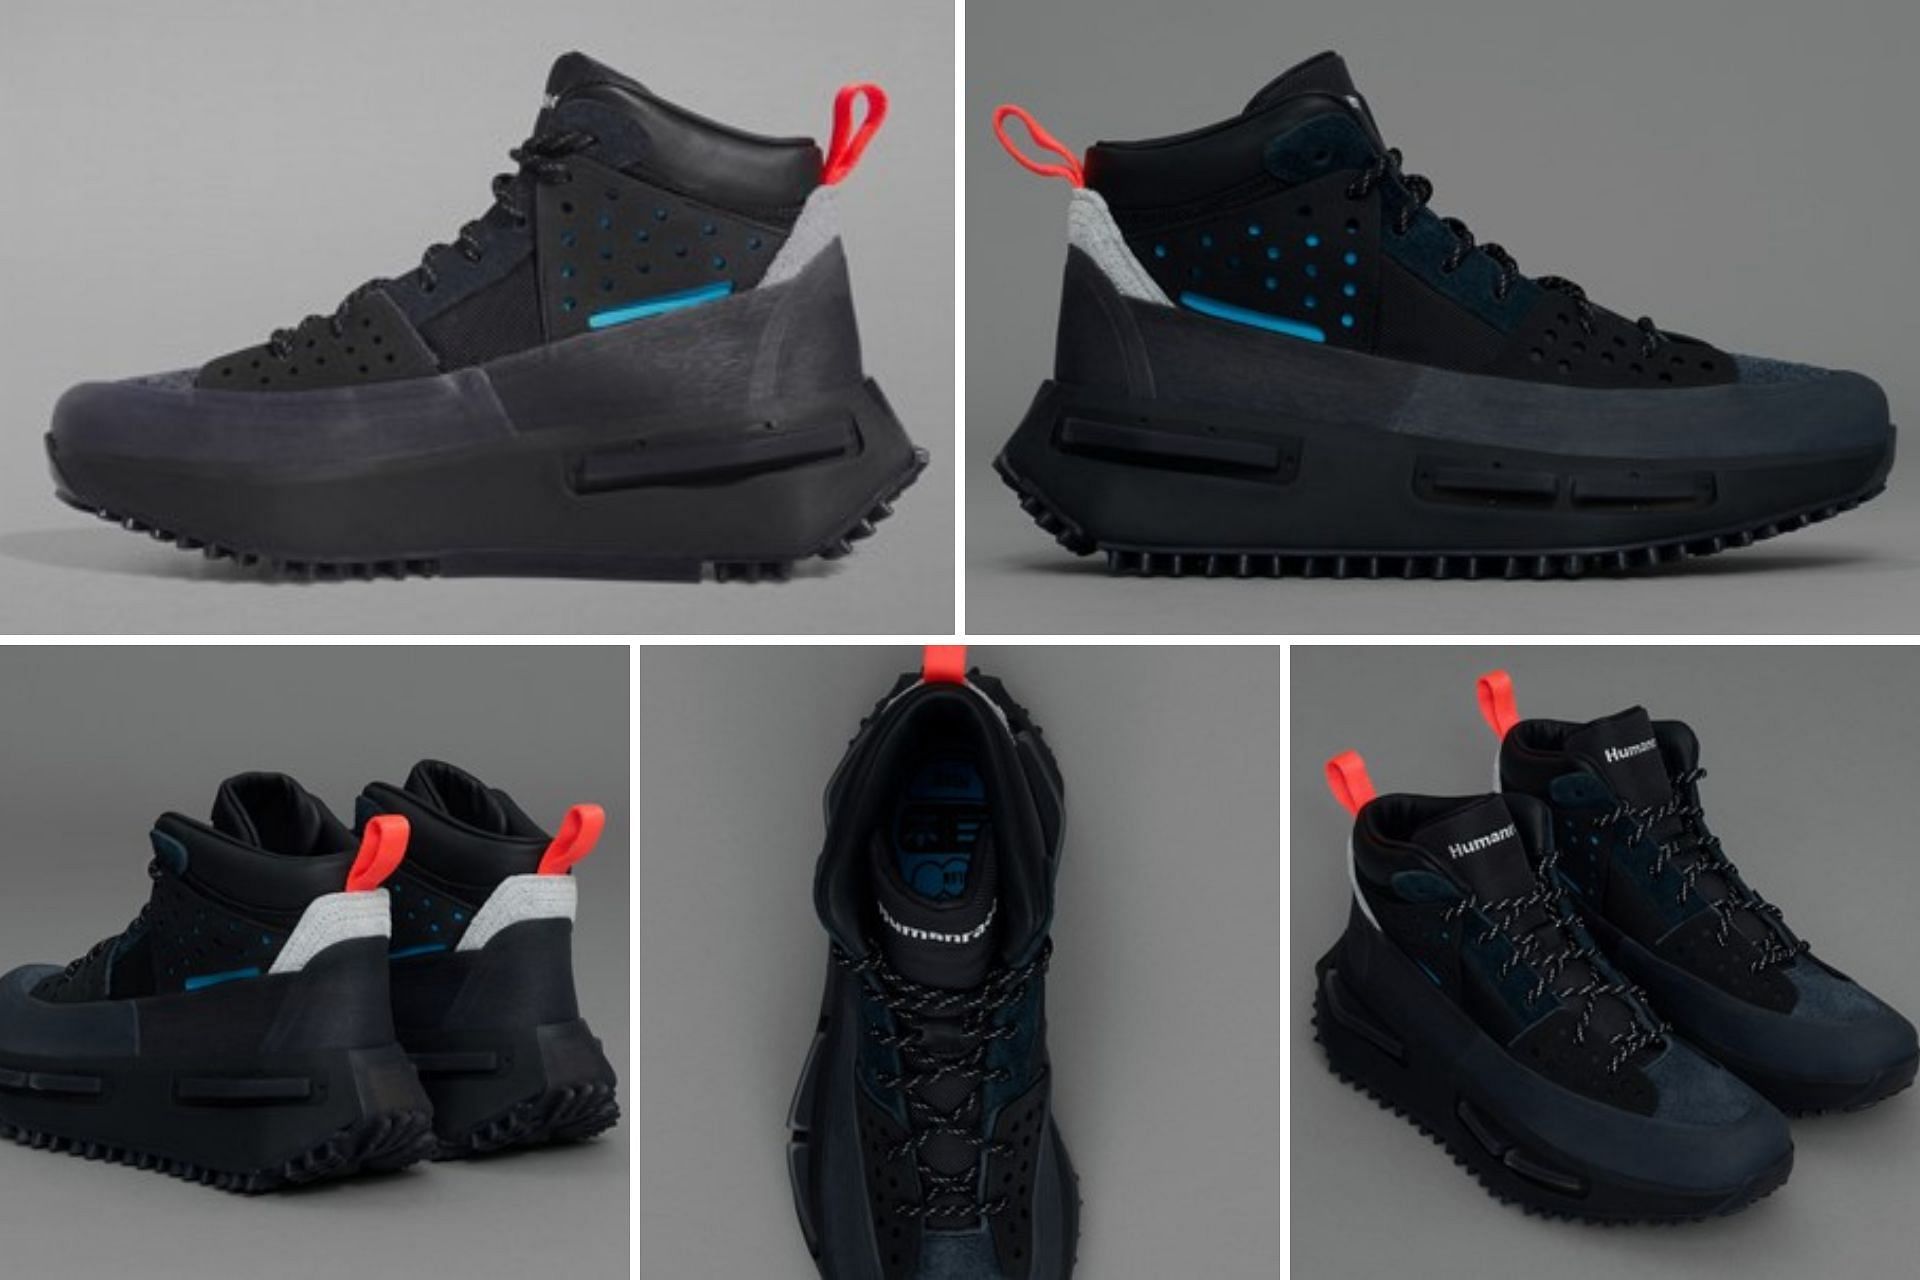 Upcoming Adidas Originals x Pharrell Williams' Humanrace NMD S1 RYAT 'Black' hiking-inspired boot (Image via Sportskeeda)